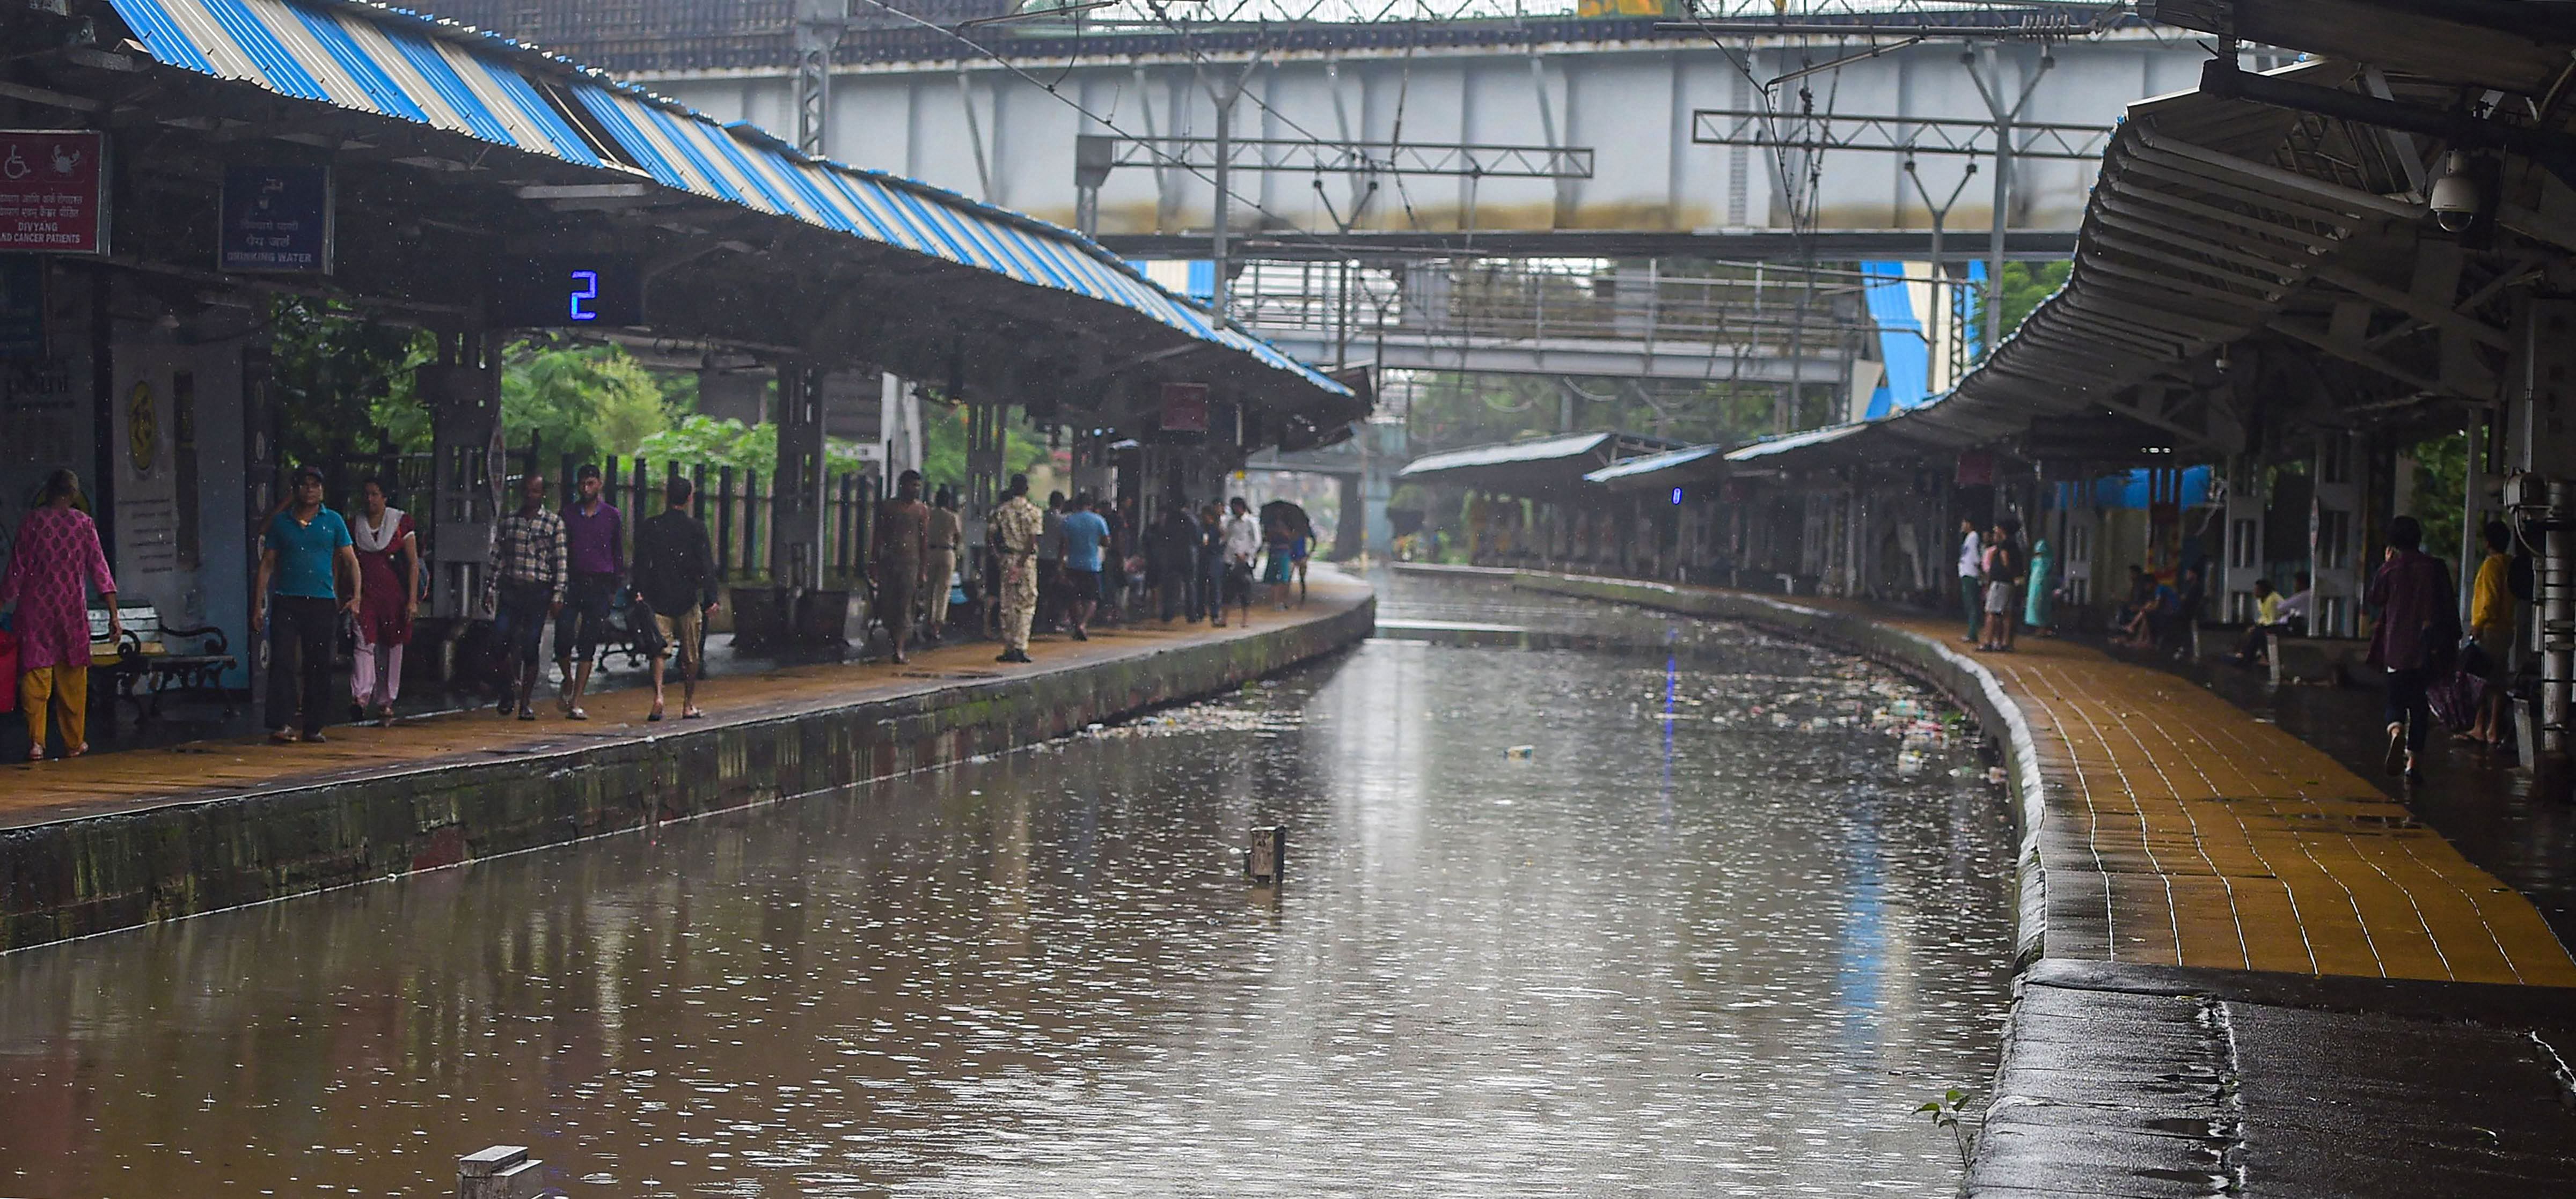 A view of the waterlogged Chunabhatti Station after heavy monsoon rains, in Mumbai. (File Photo)